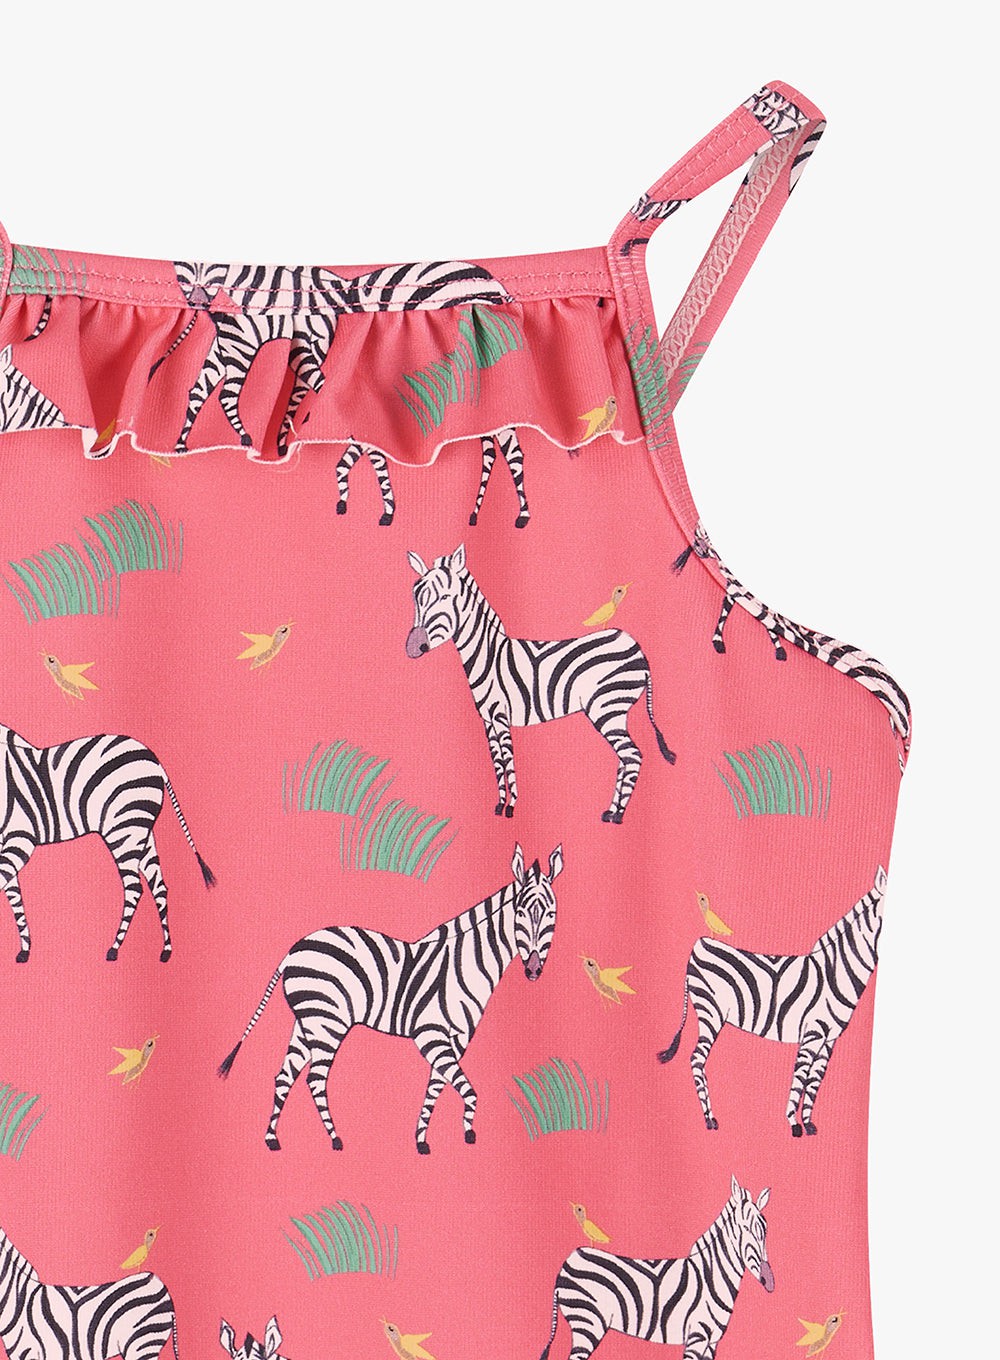 Funky Retro Pink Zebra Animal Skin Print Swimsuit Bodysuit